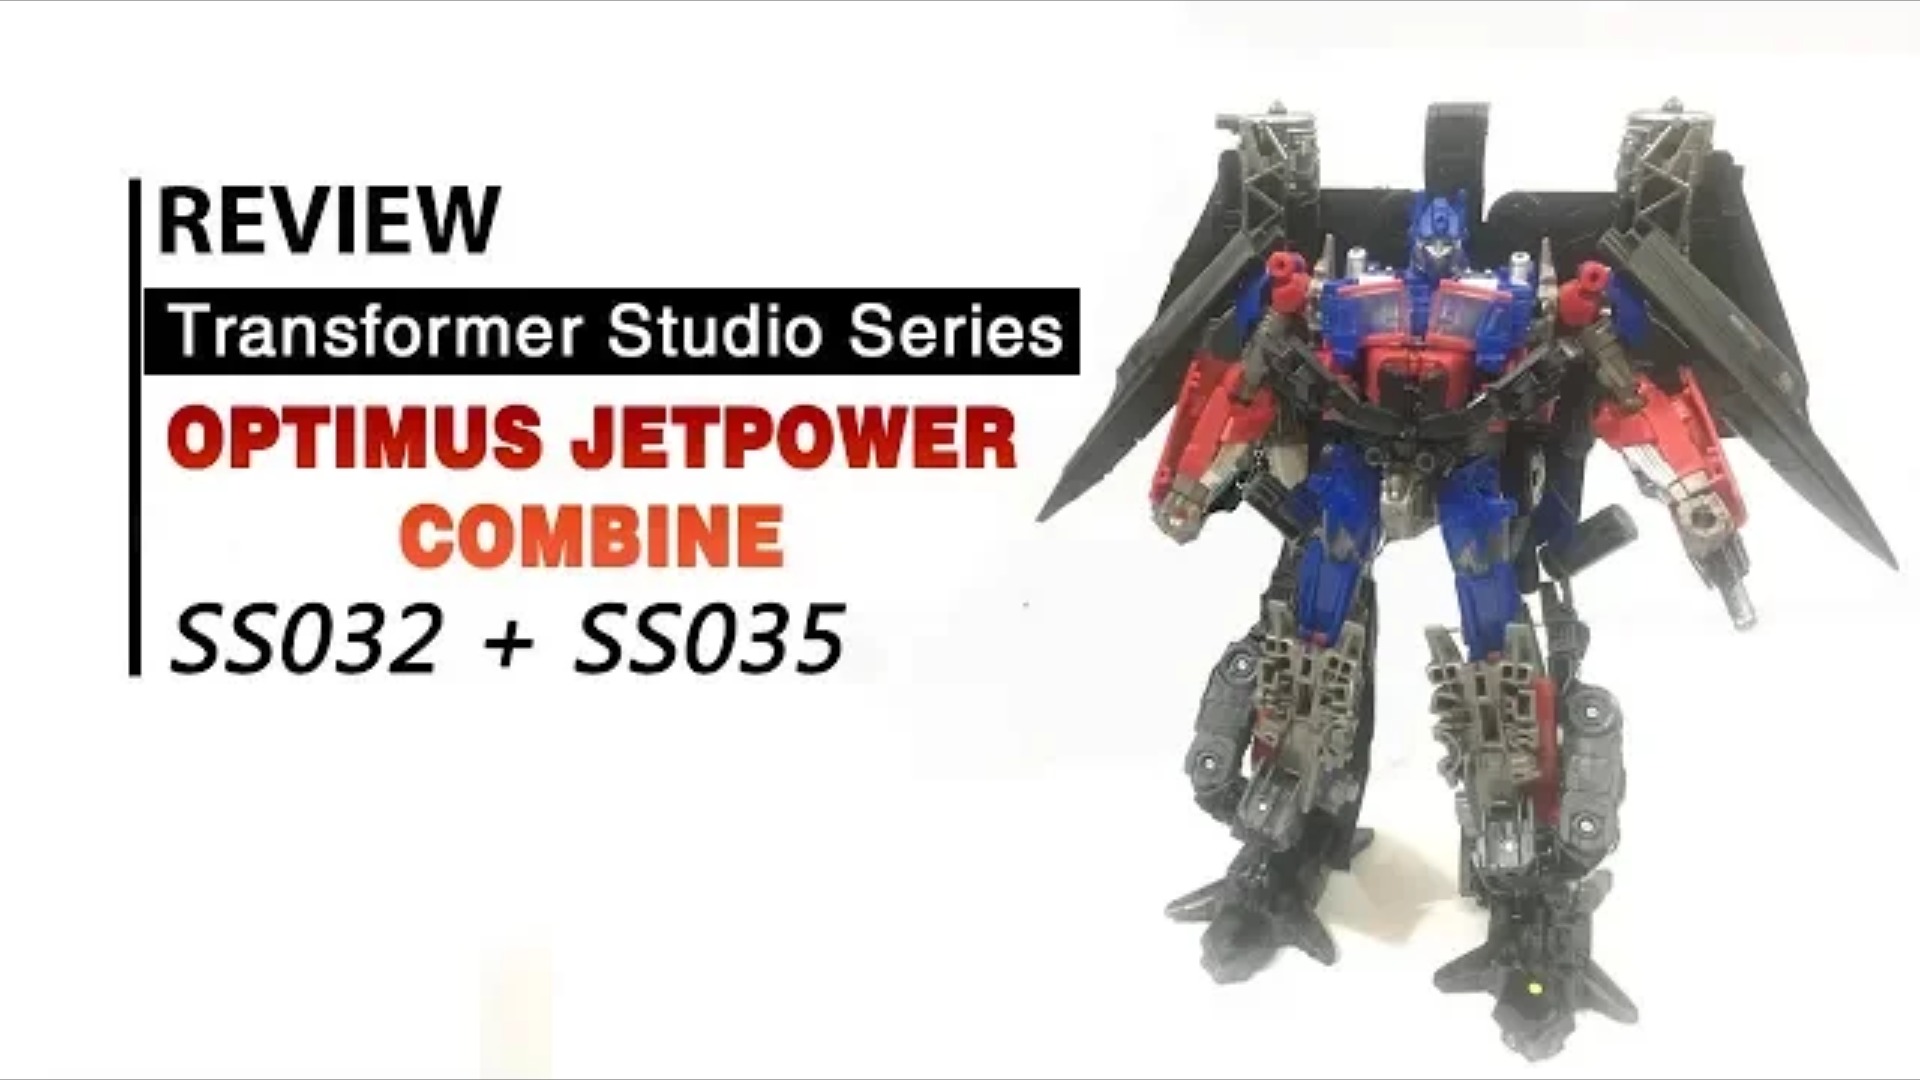 transformers revenge of the fallen studio series optimus prime